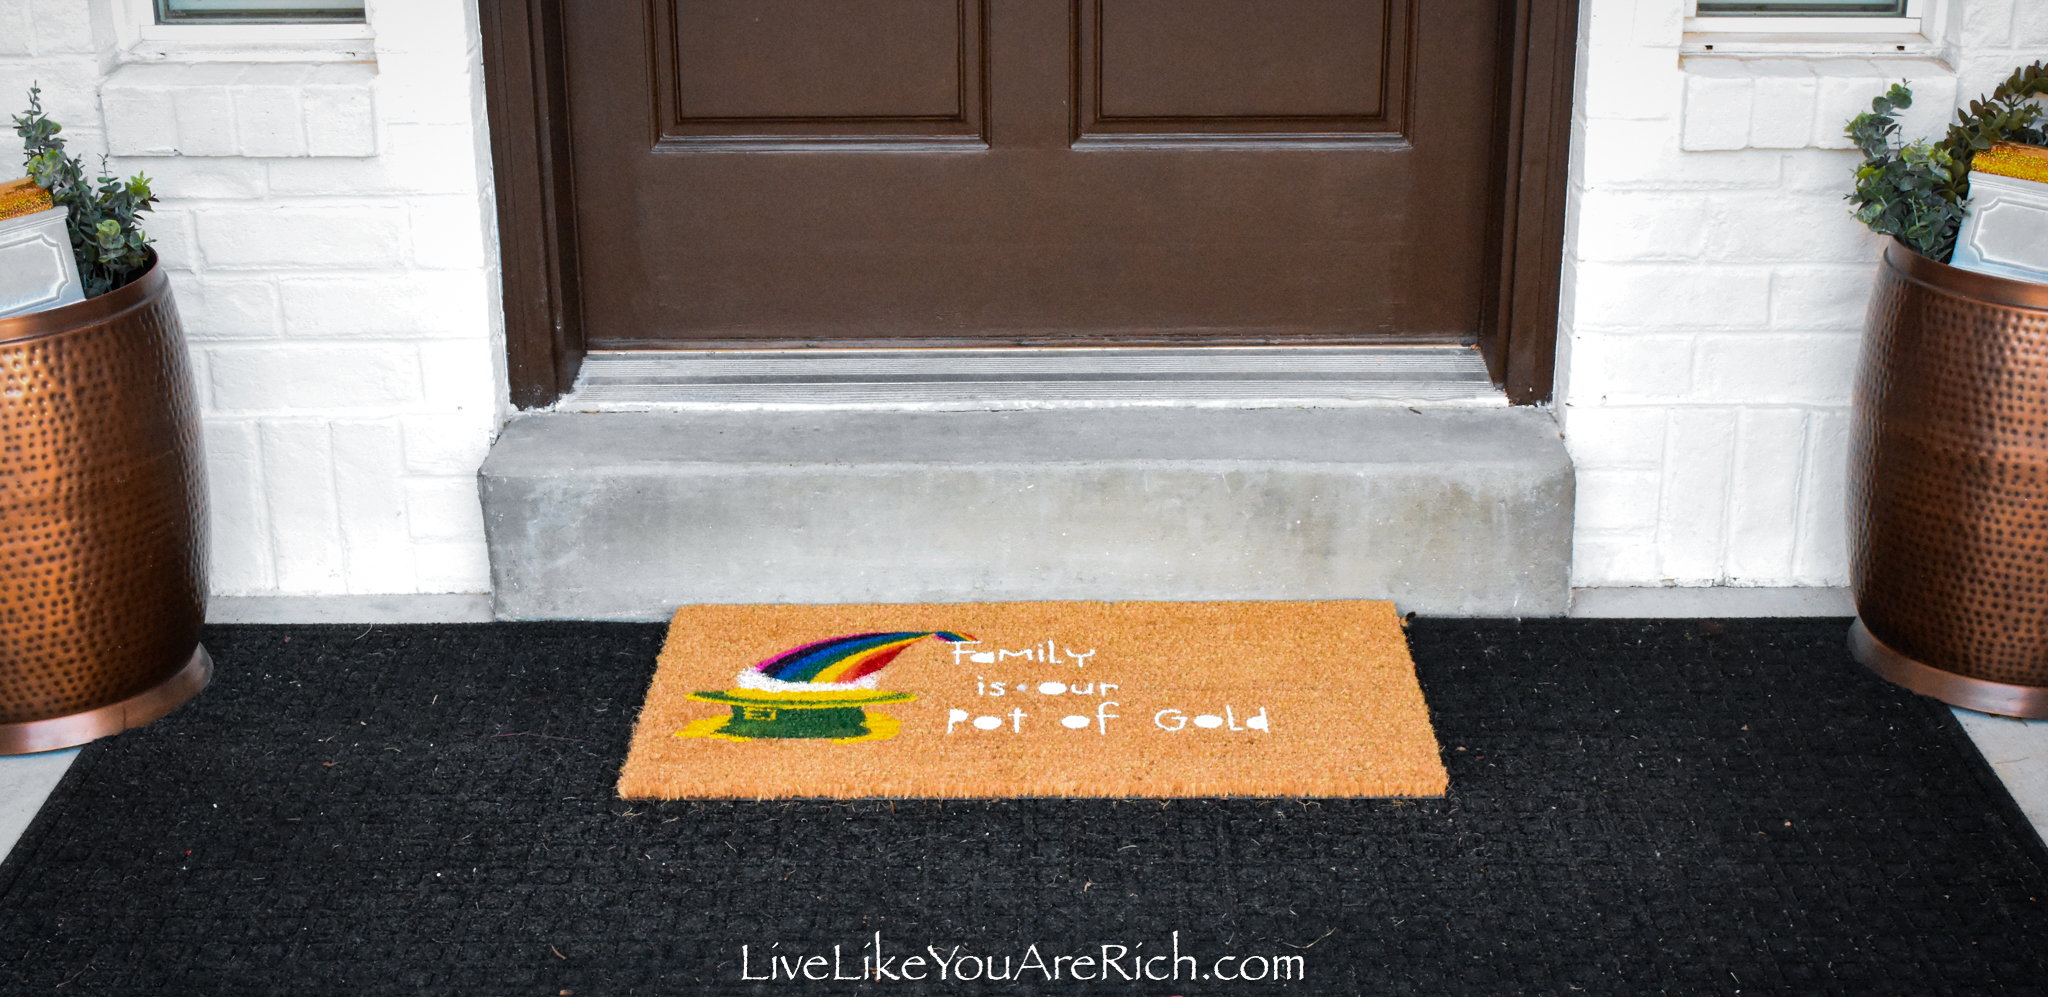 St. Patrick's Day rainbow doormat